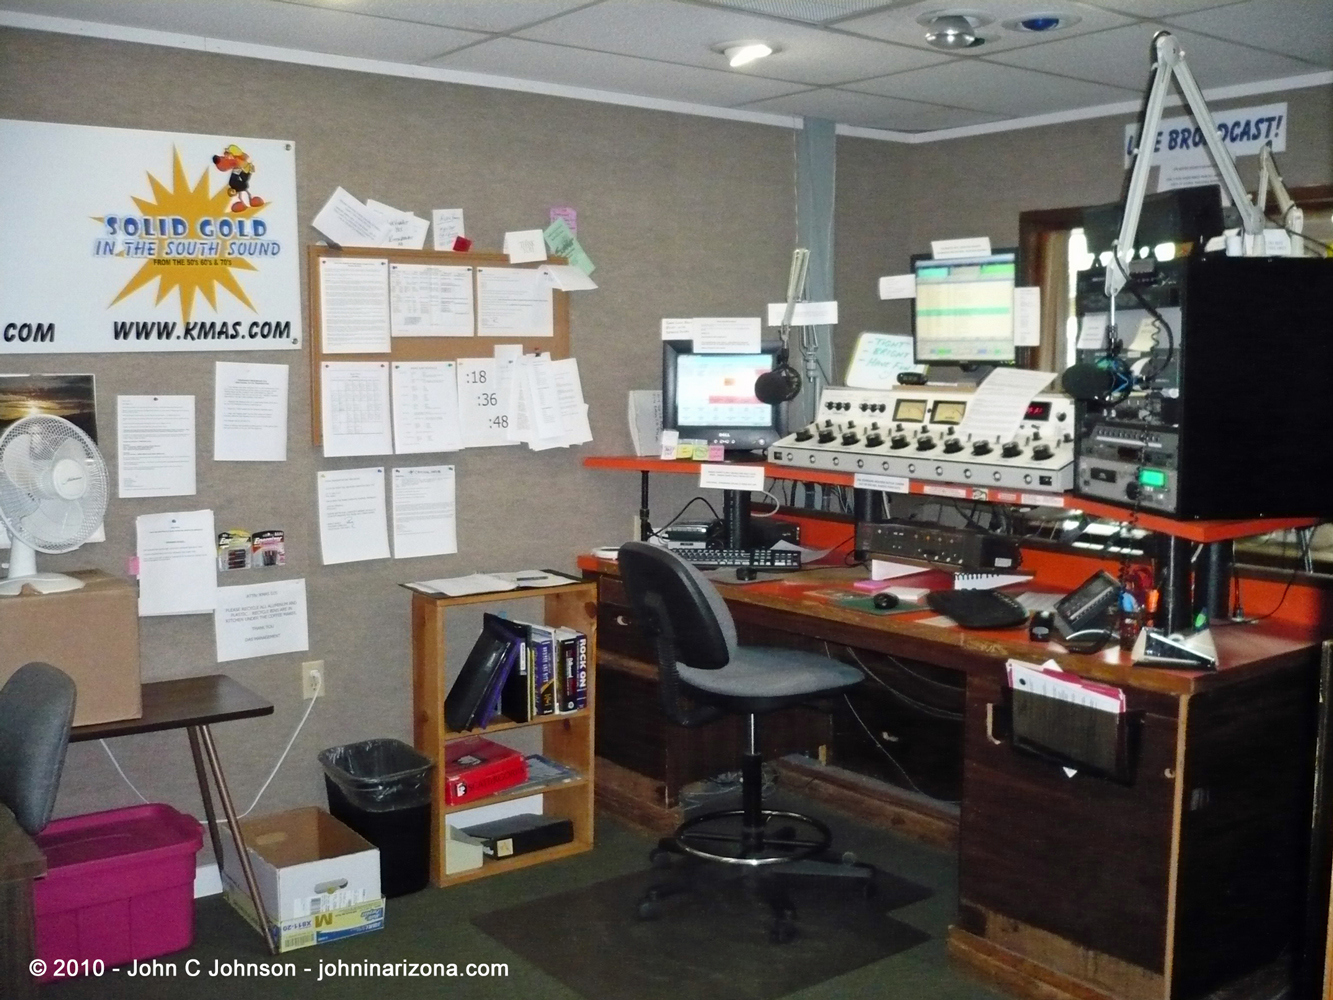 KMAS Radio 1030 Shelton, Washington